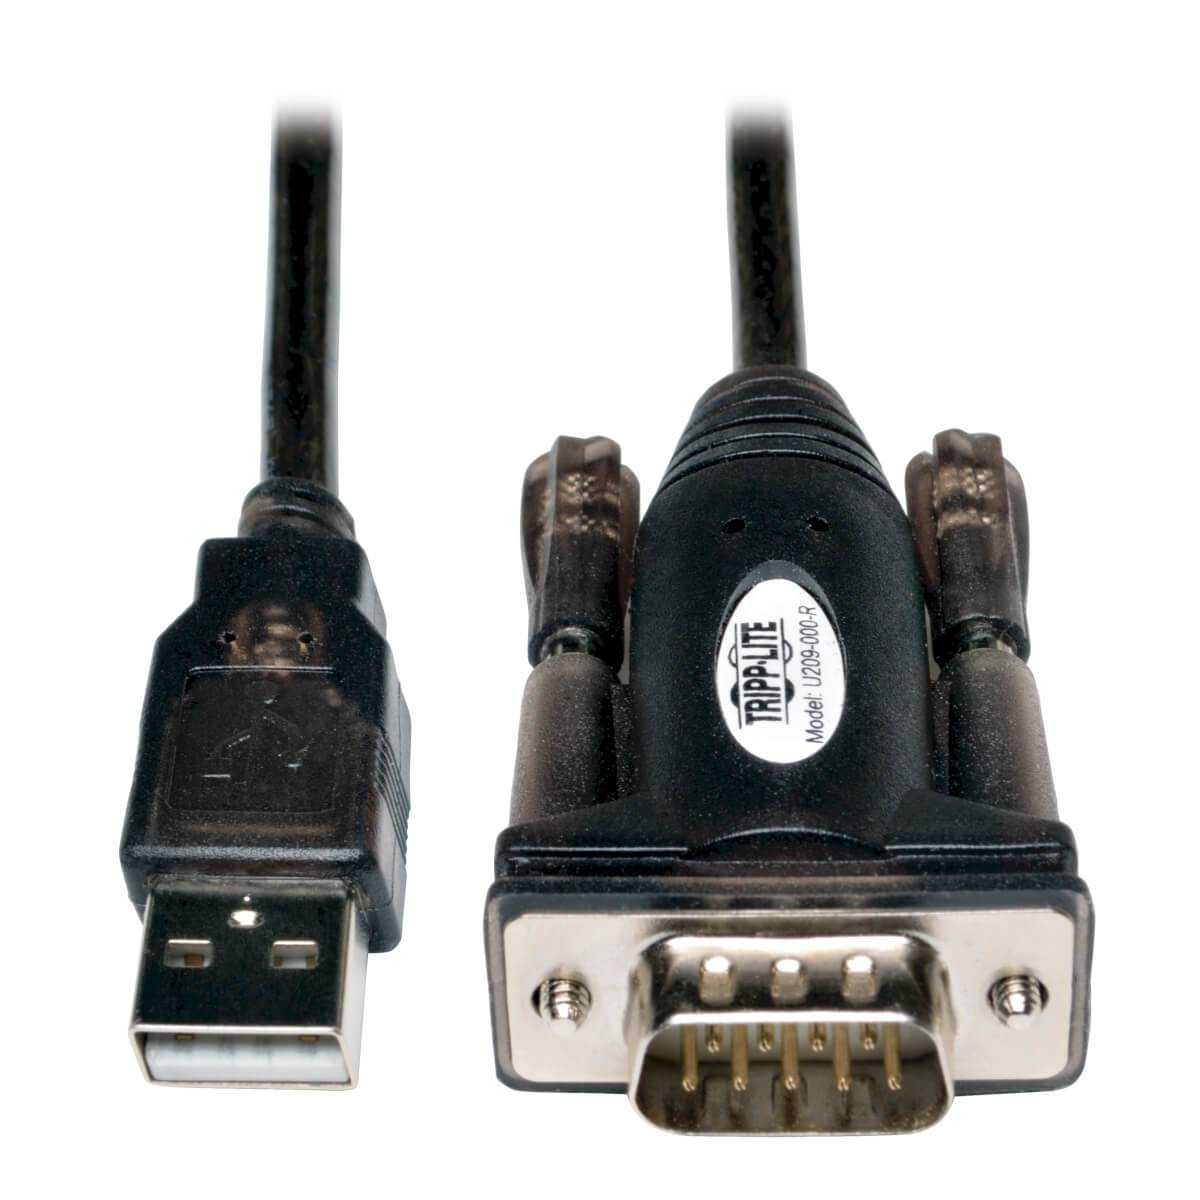 Rca Informatique - Image du produit : 1.5M USB/SERIAL ADAPTER CABL